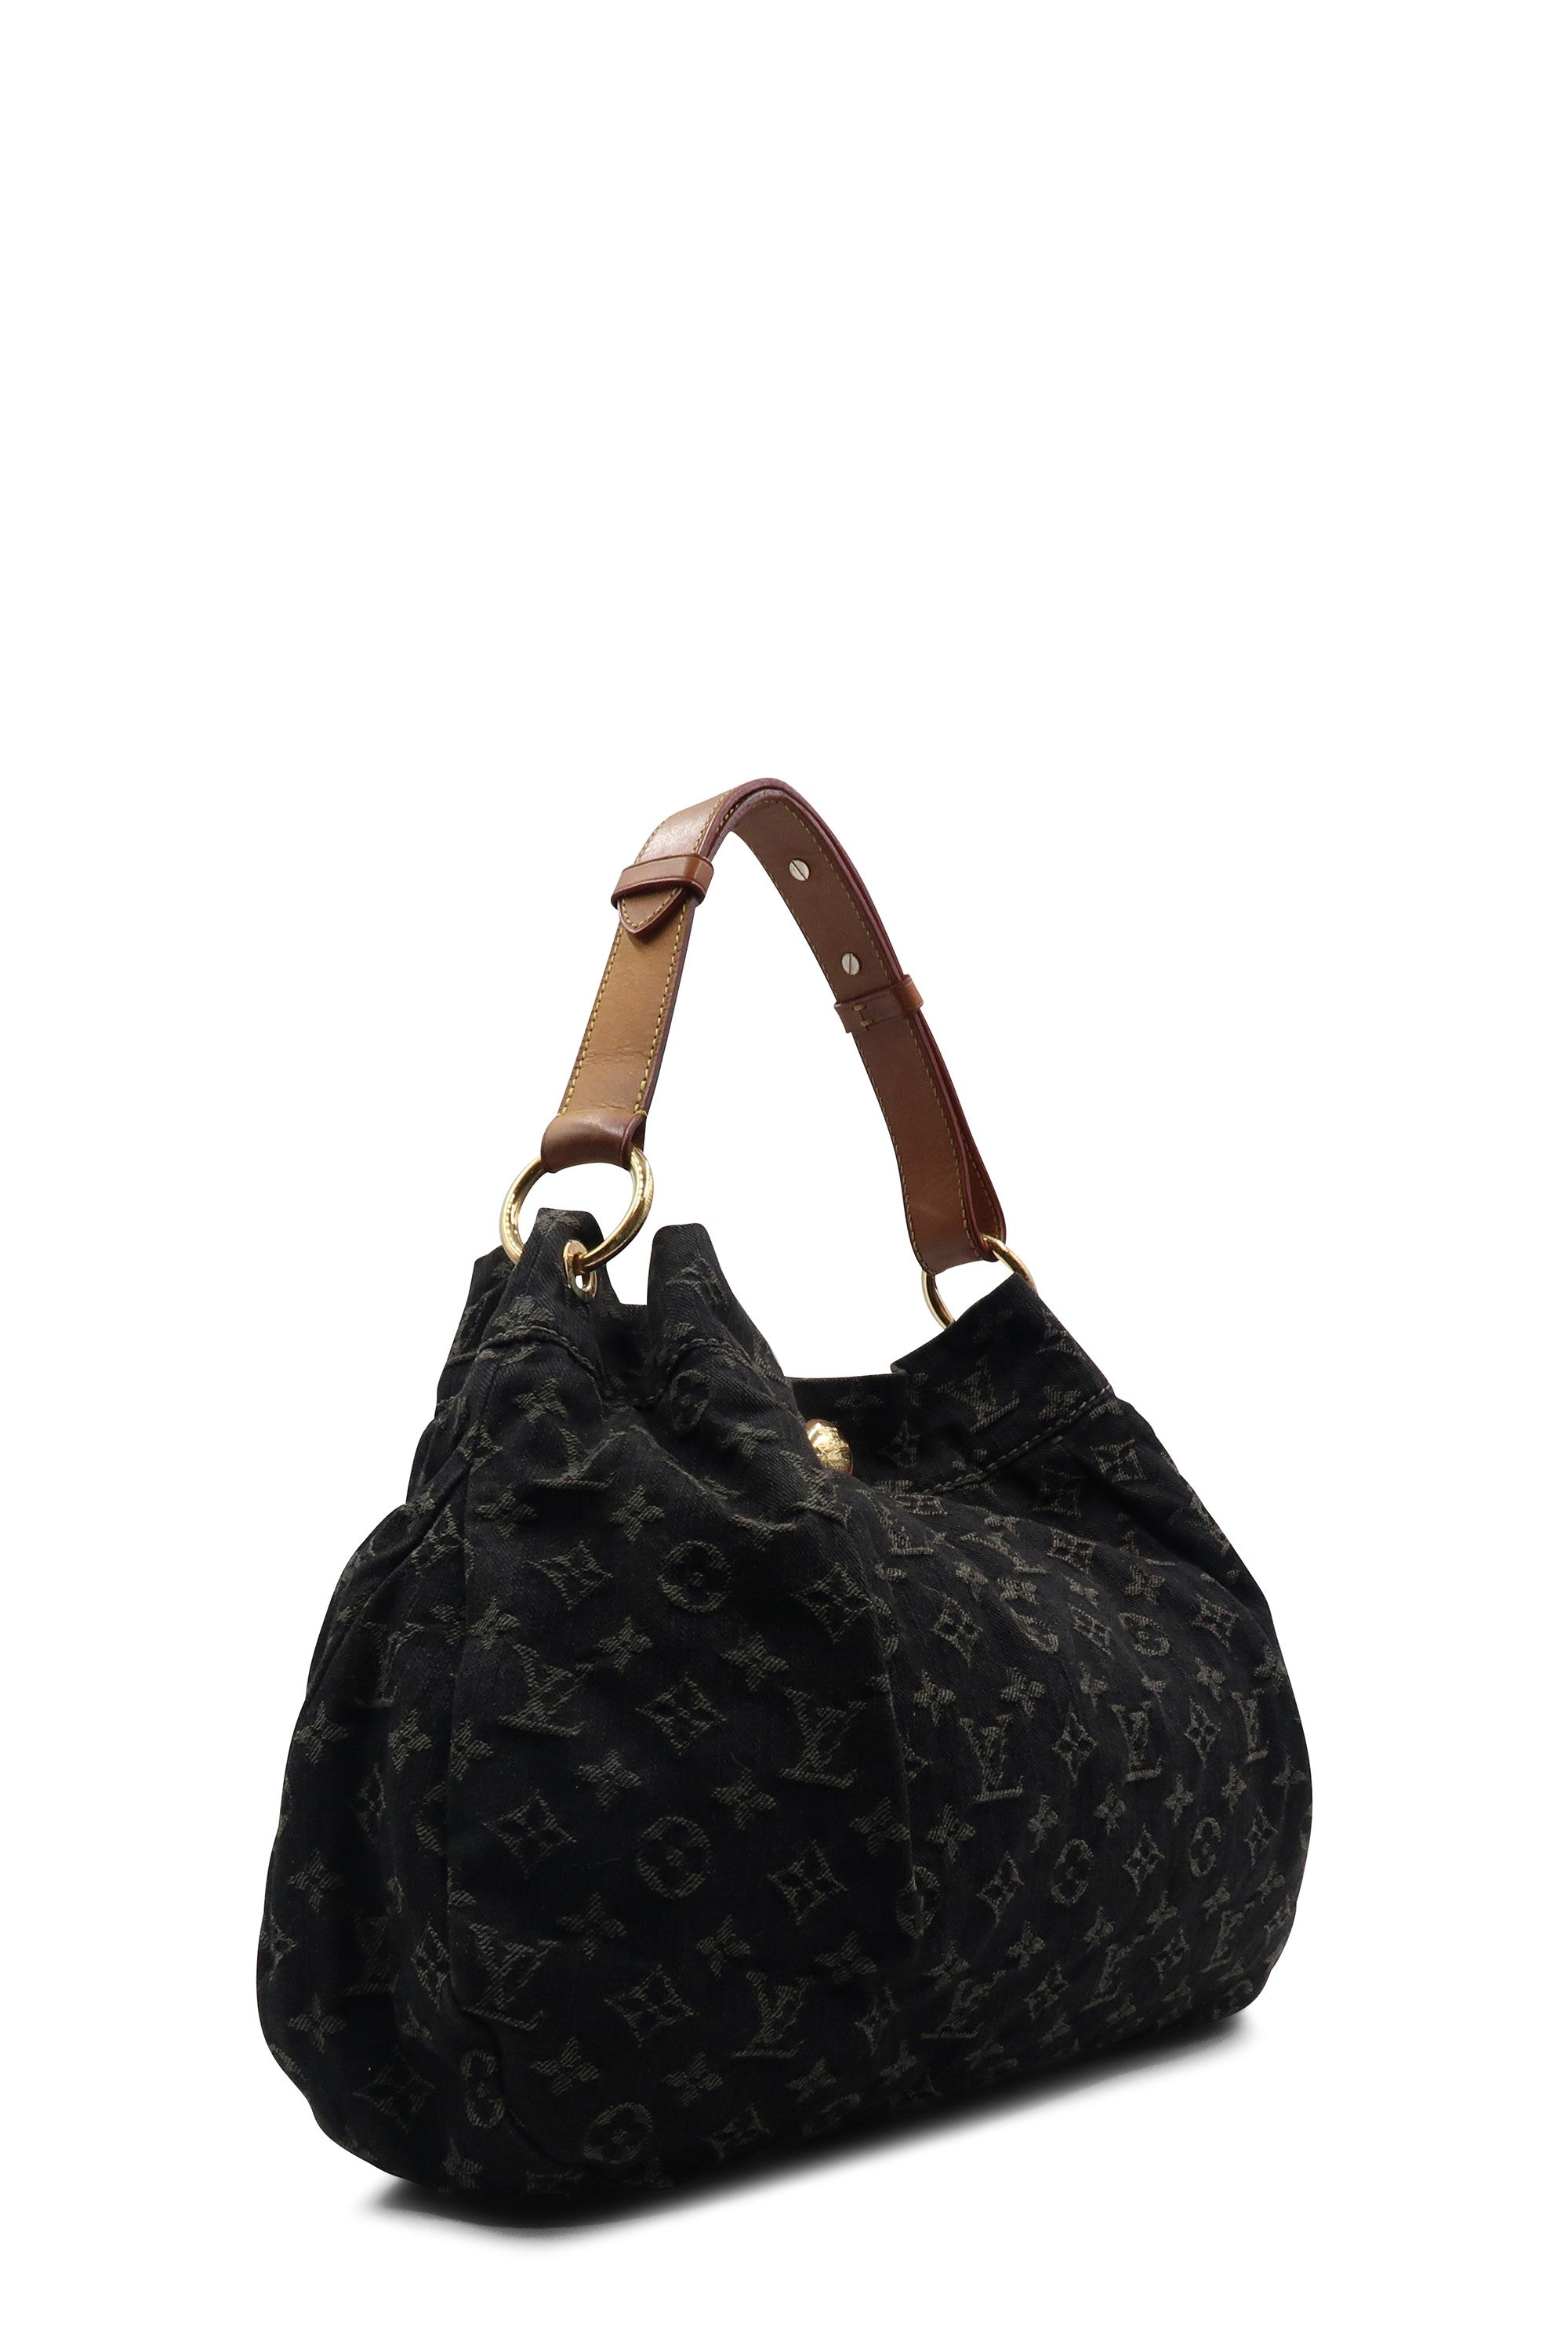 Louis Vuitton Daily Handbag Denim PM Black 21186266